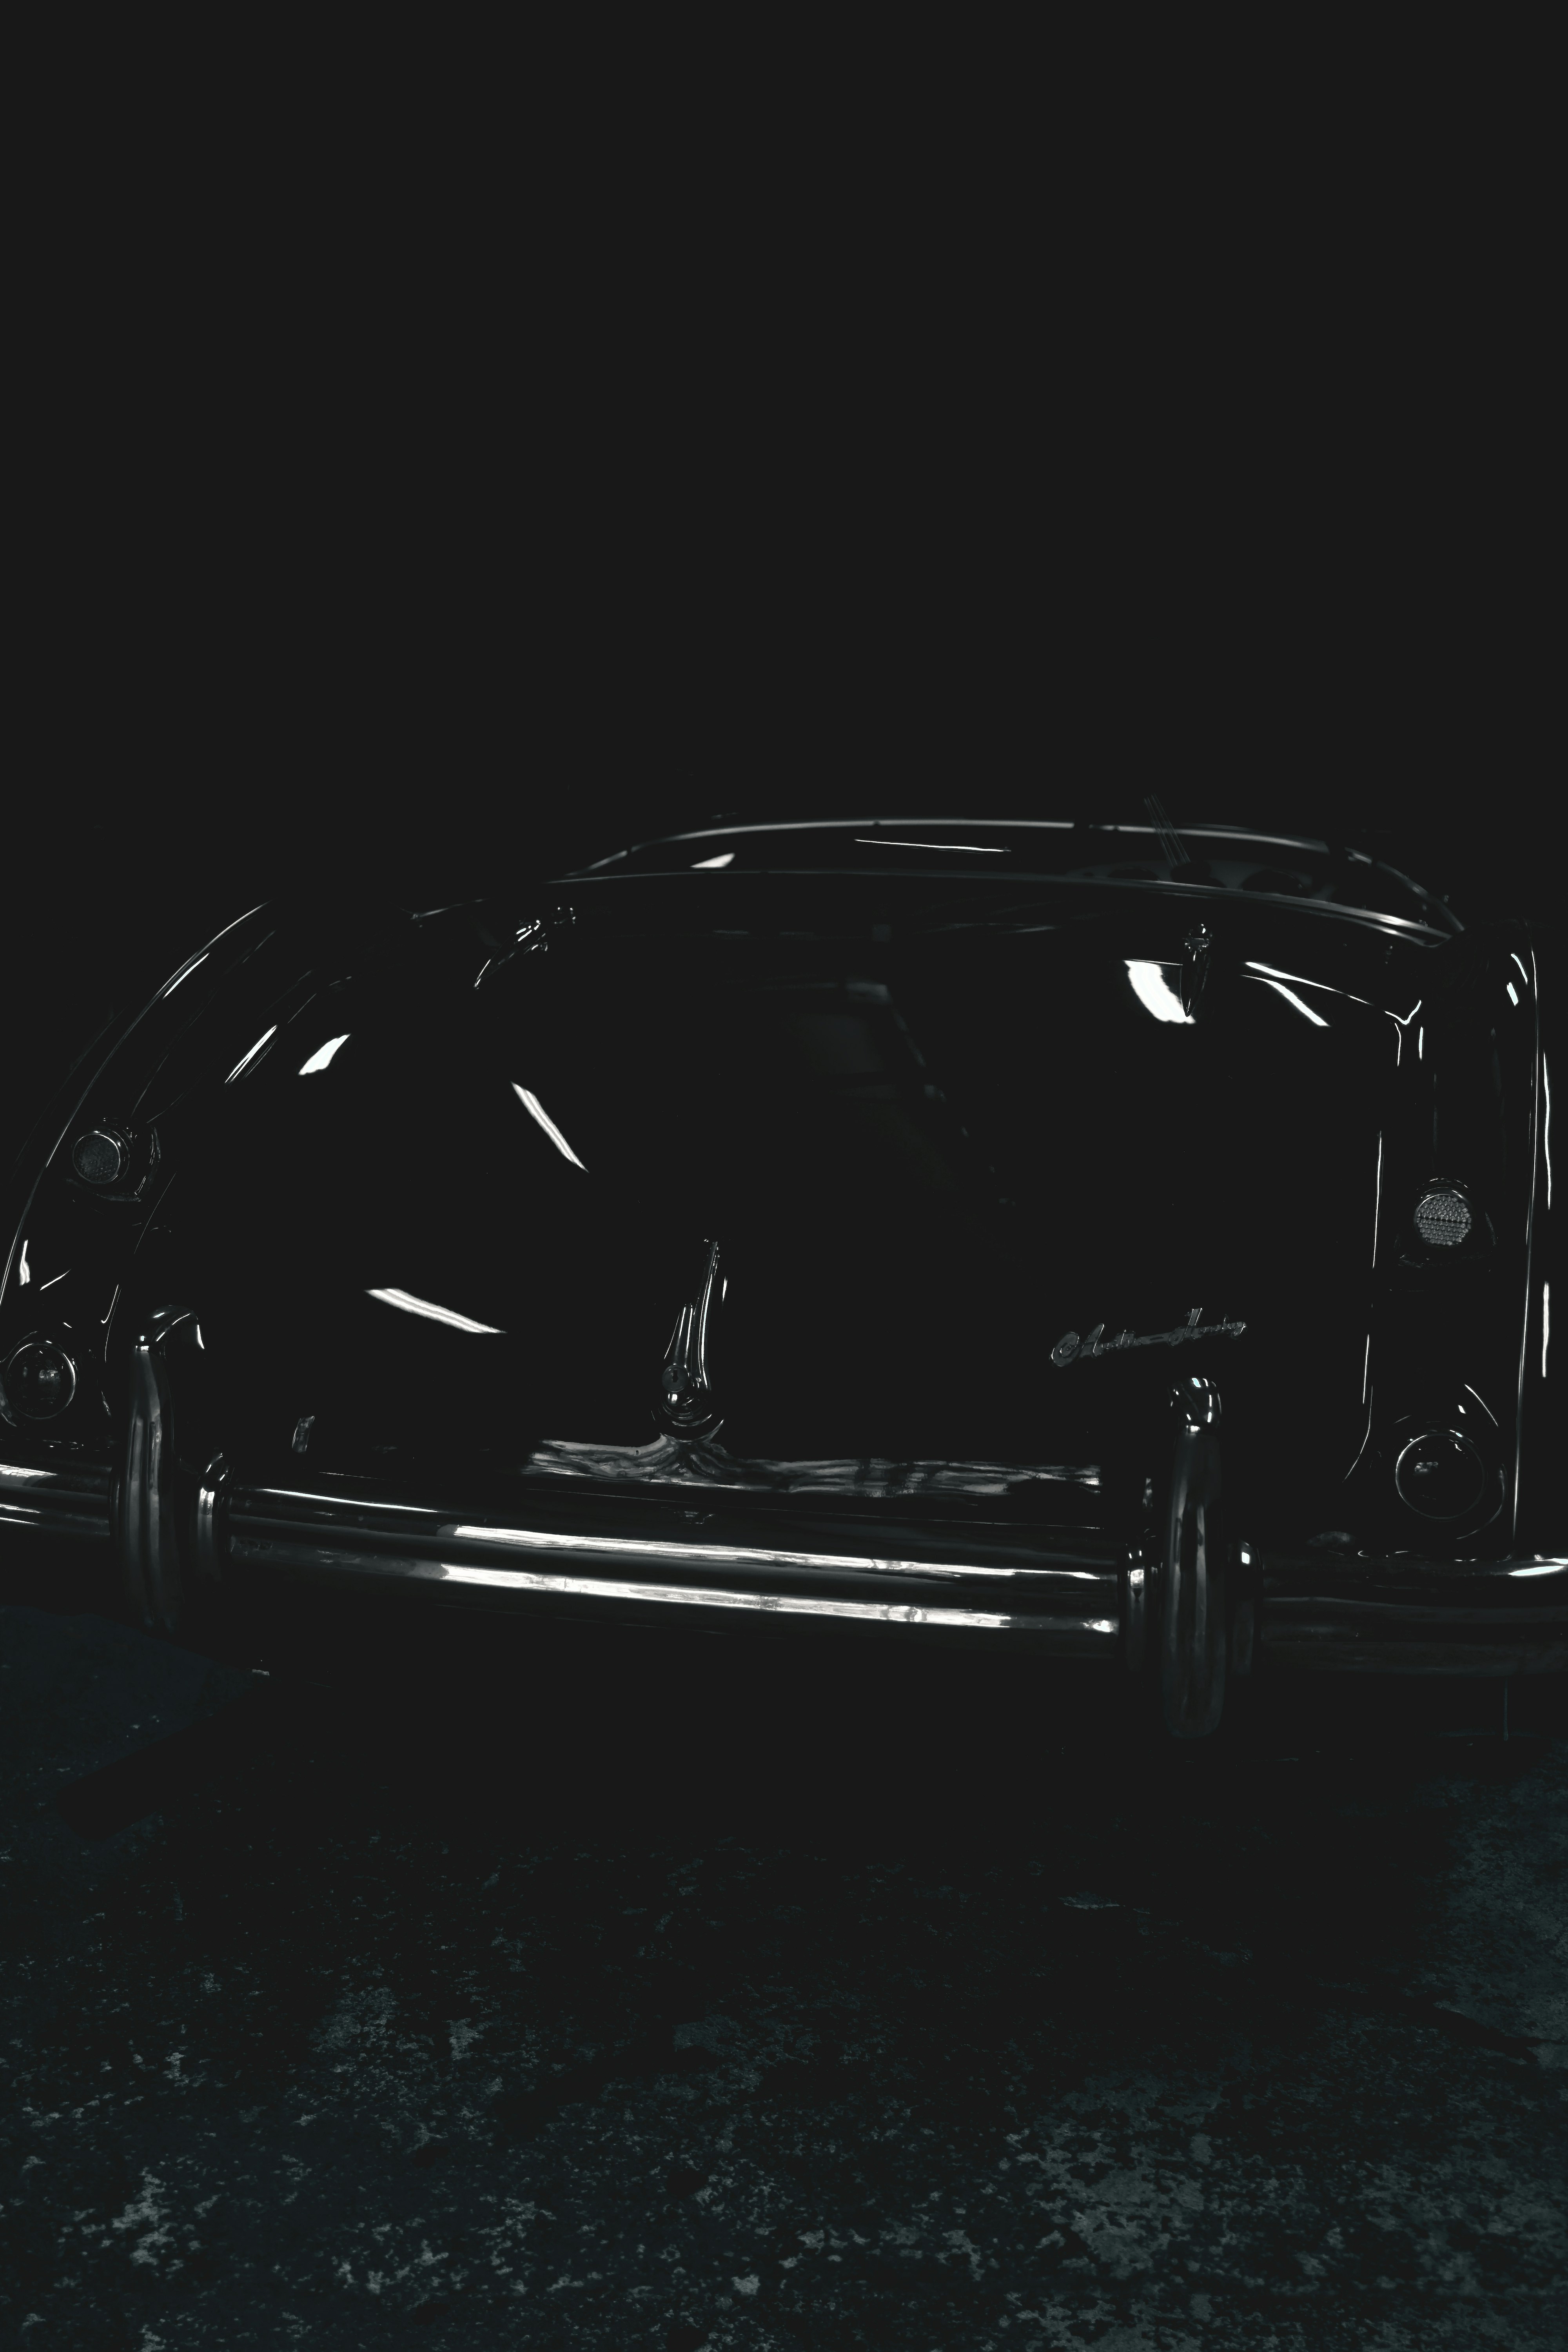 black car on black and white background